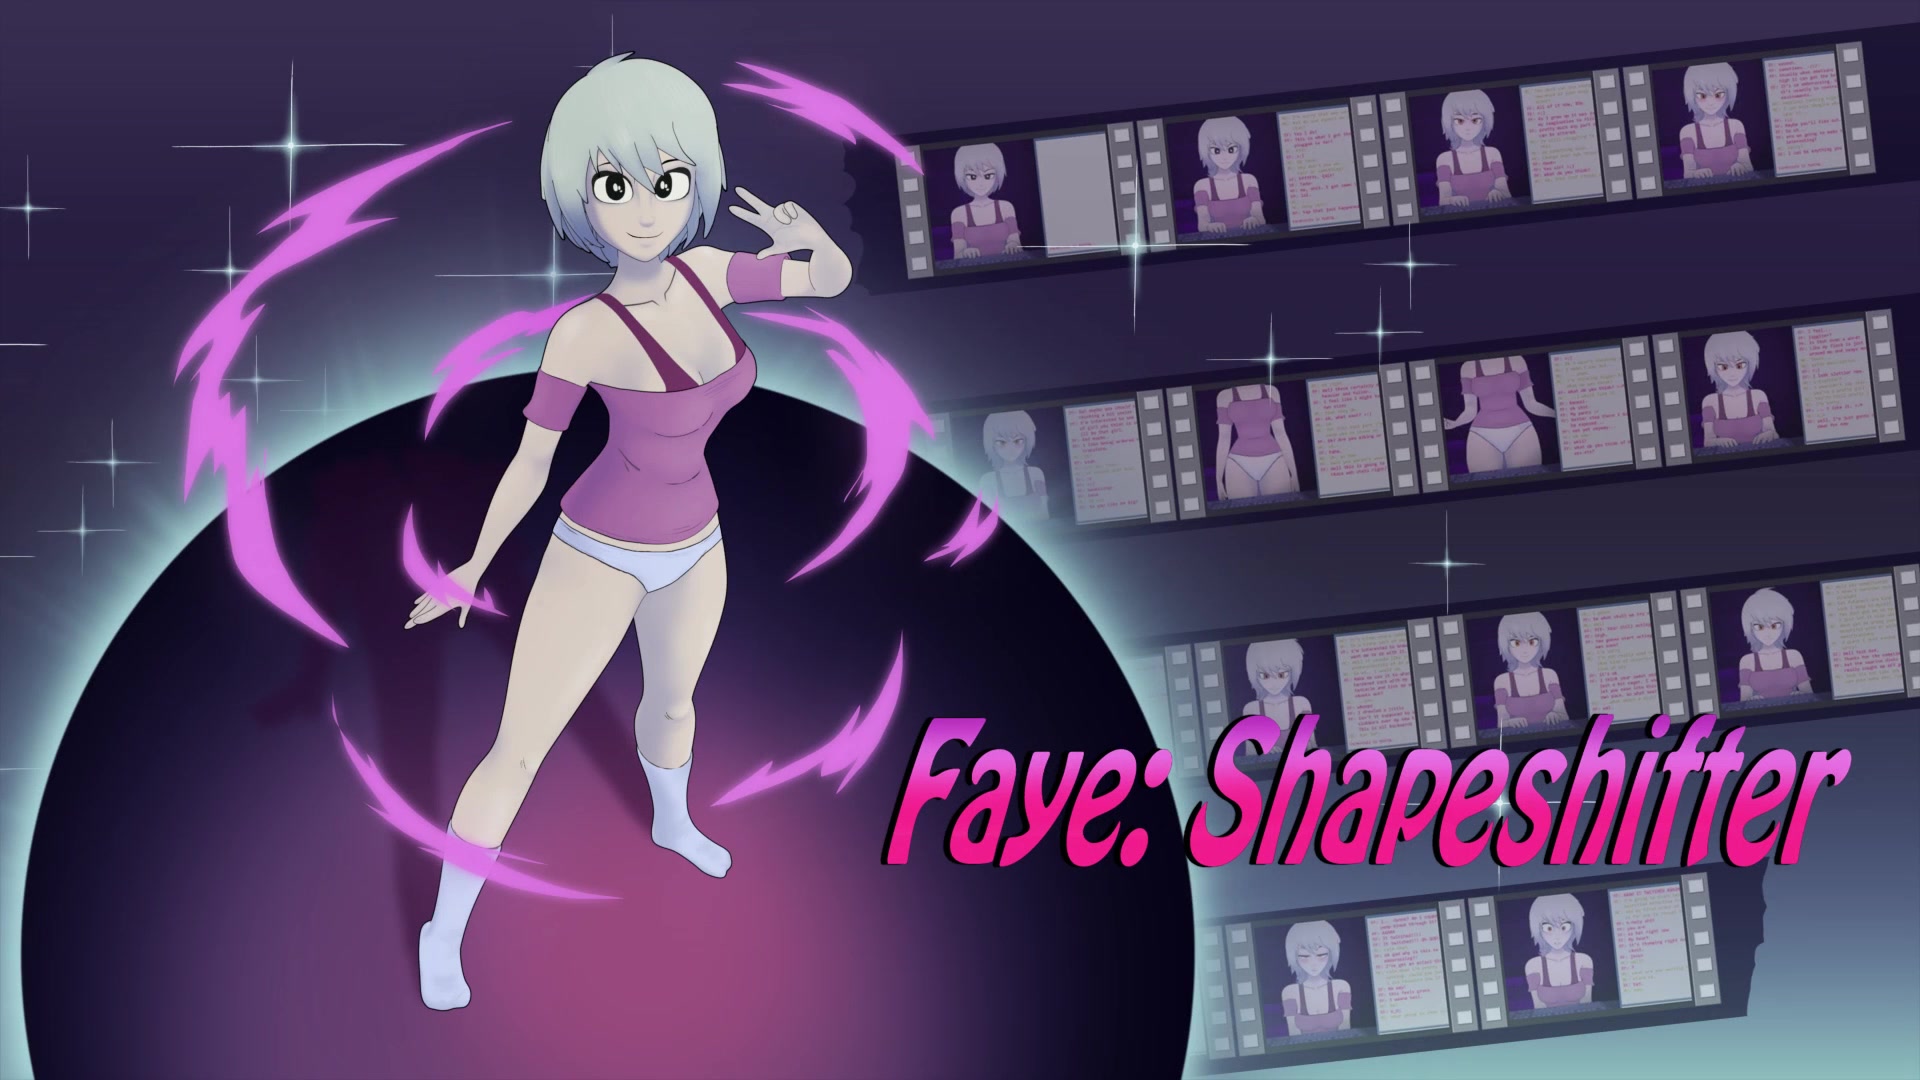 Faye shapeshifter nsfw version